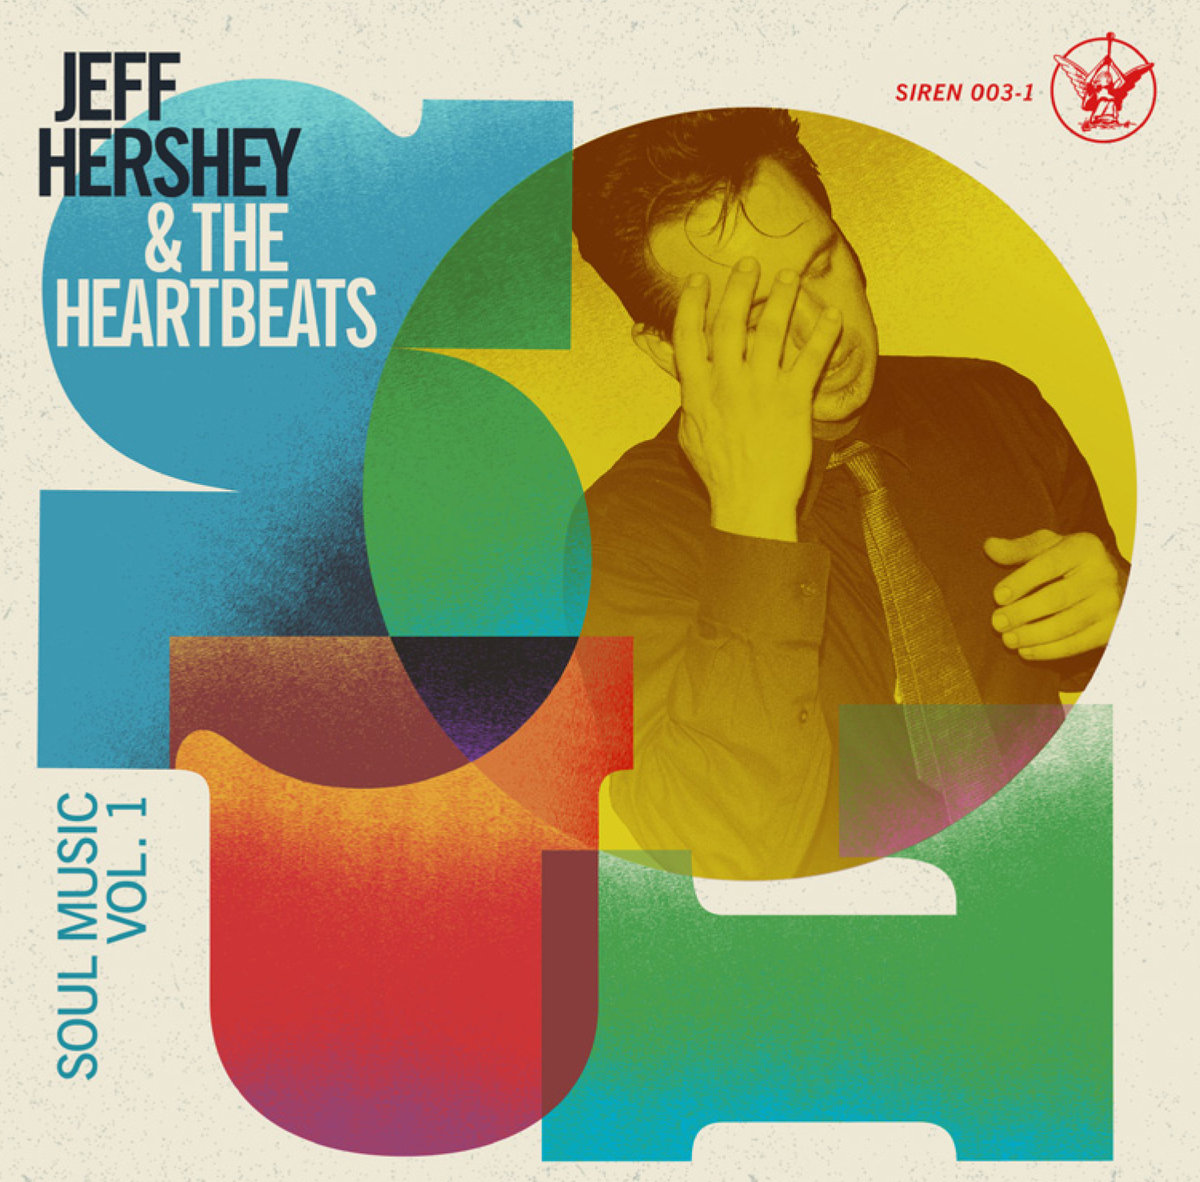 Jeff Hershey & The Heartbeats "Underground Classics" Tour